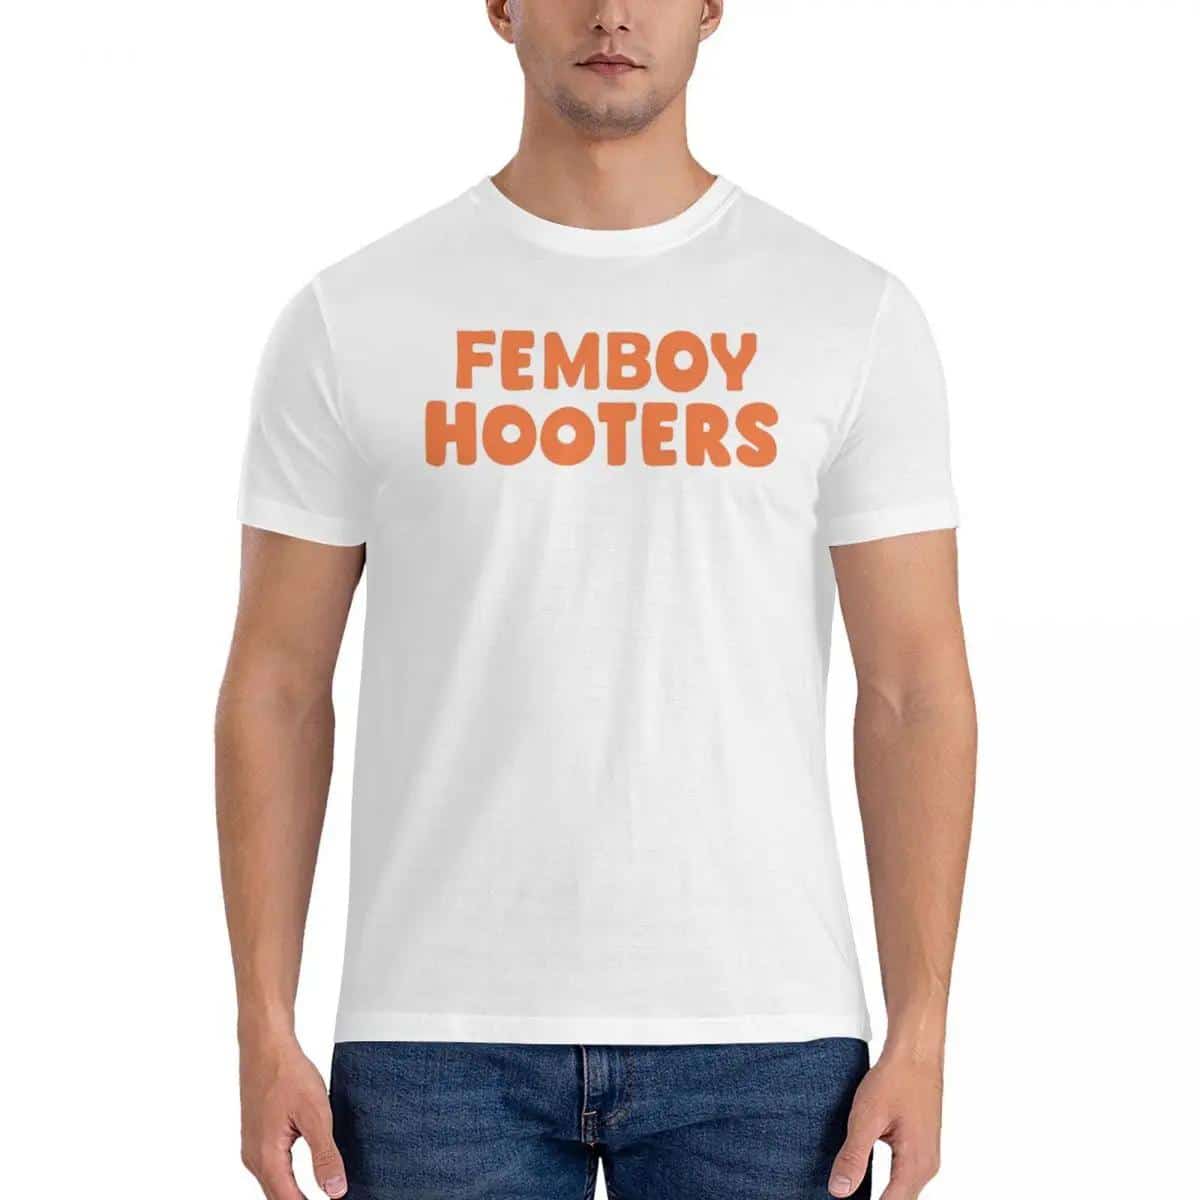 100% Cotton Femboy Hooters T-shirt Unisex Classic Oversized T Shirt Men crew Neck Summer Shirts Tops S-6XL 1